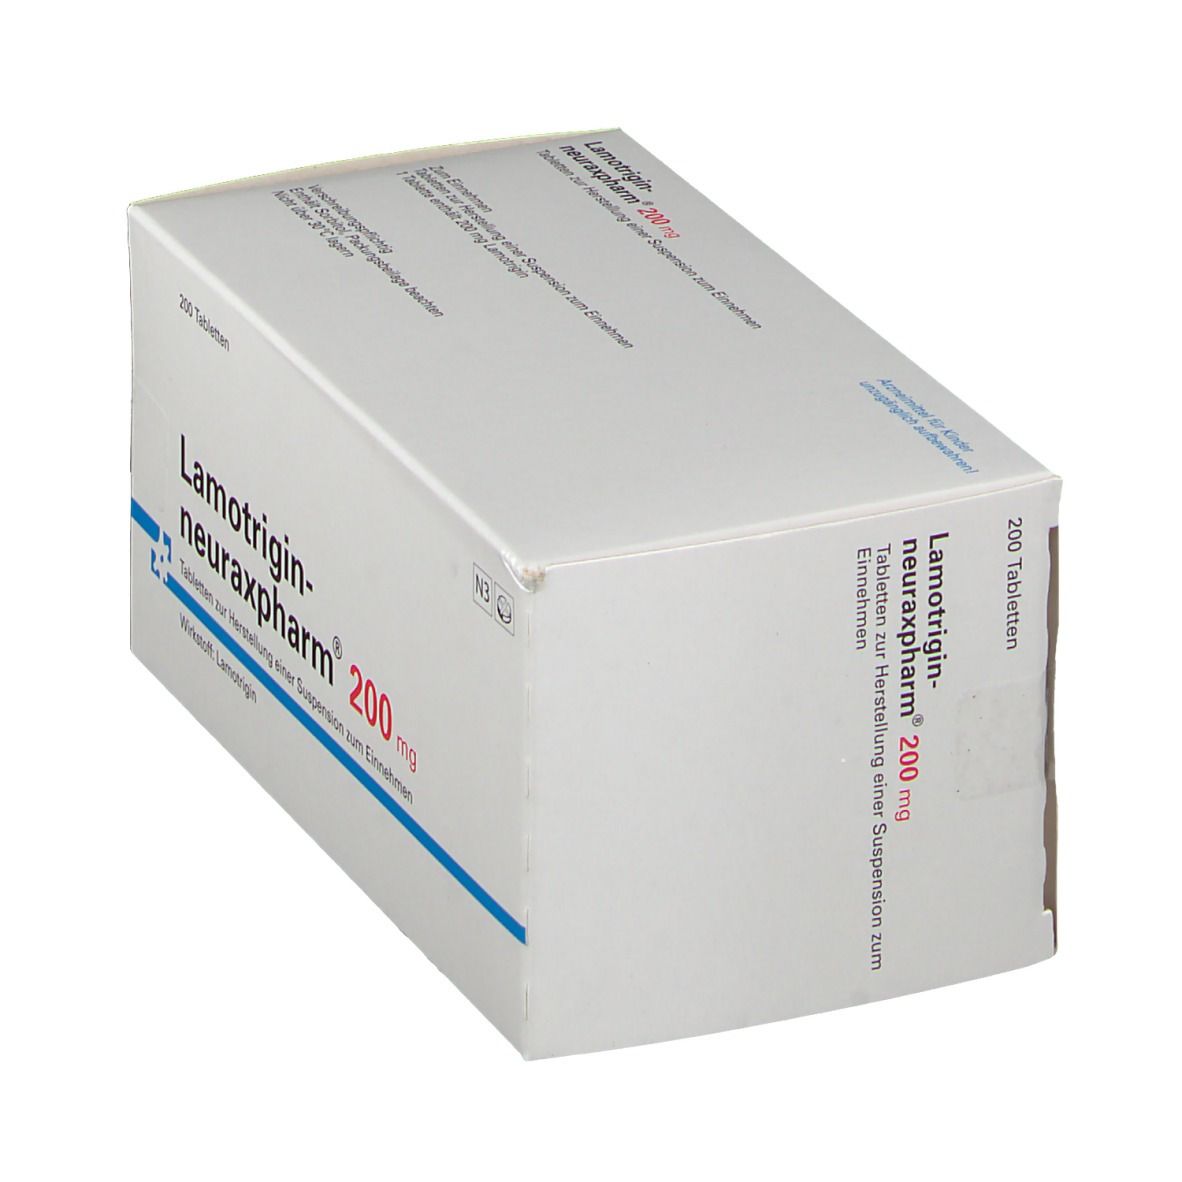 Lamotrigin-neuraxpharm® 200 mg